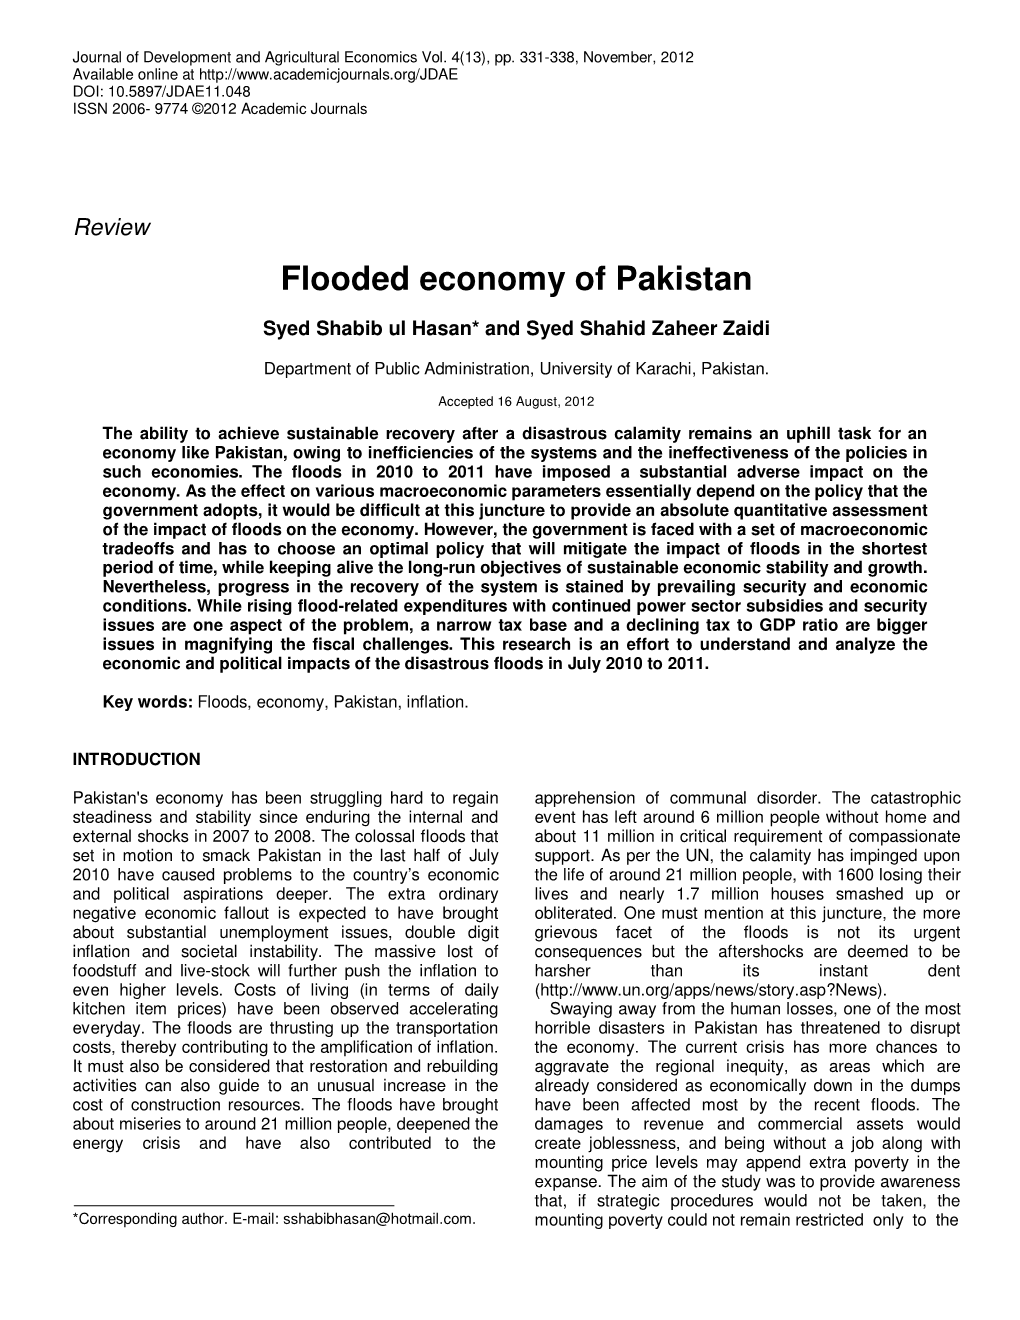 Flooded Economy of Pakistan